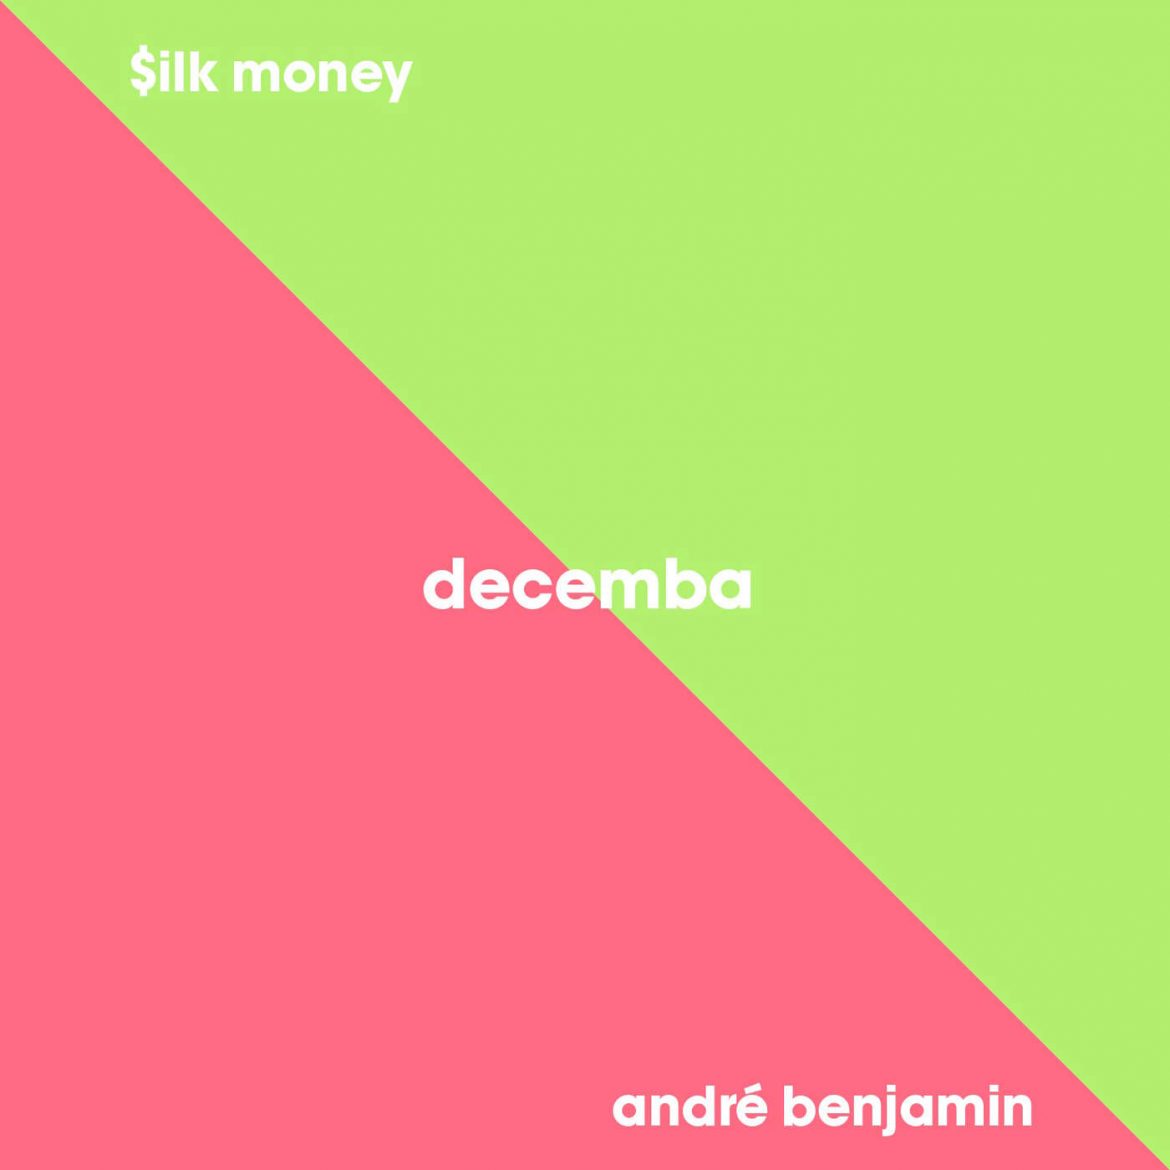 Listen To The “Decemba” Remix Feat. $ilk Money x André 3000